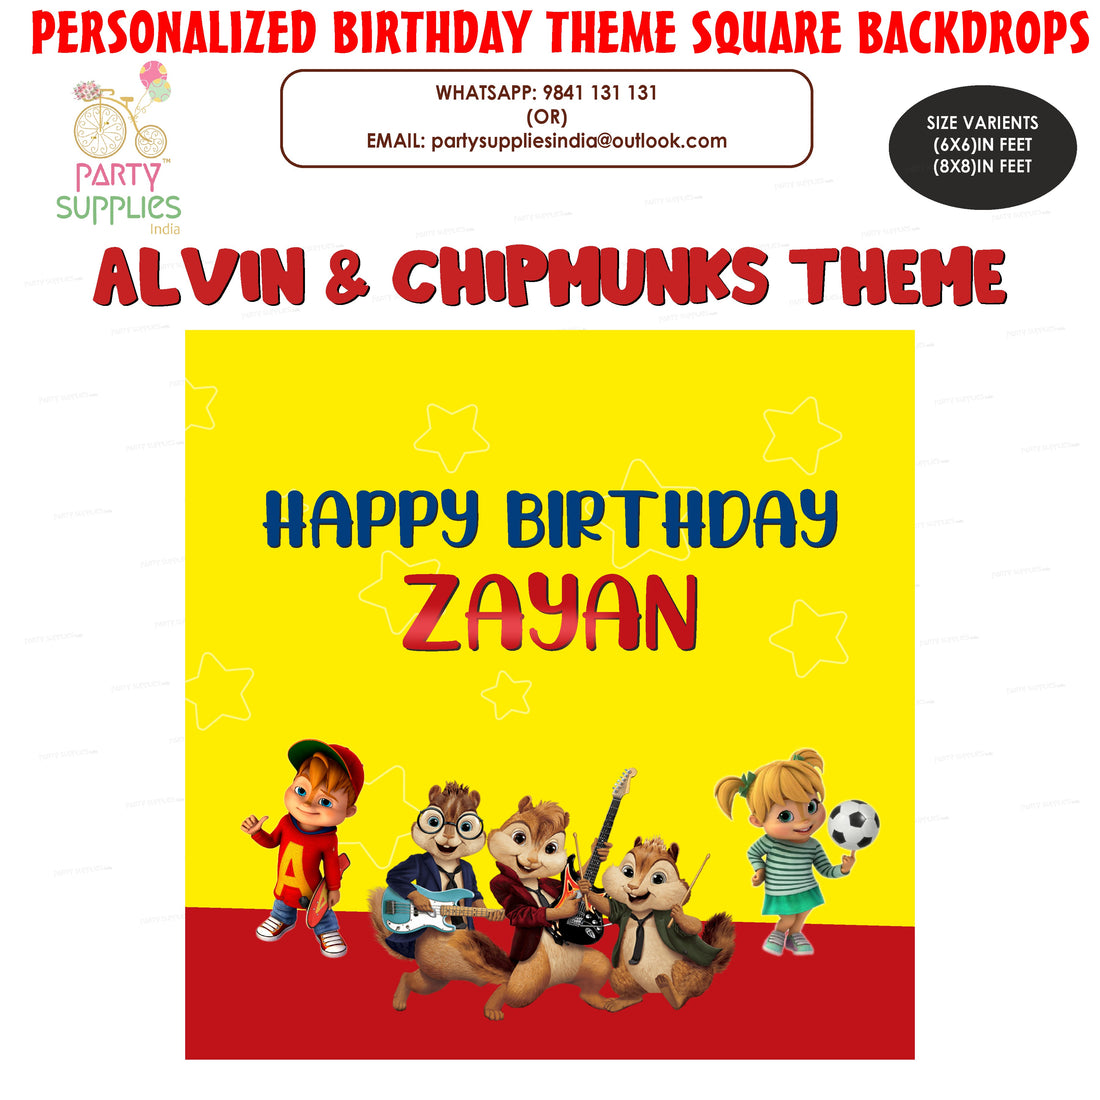 PSI Alvin and Chipmunks Theme classic Square Backdrop